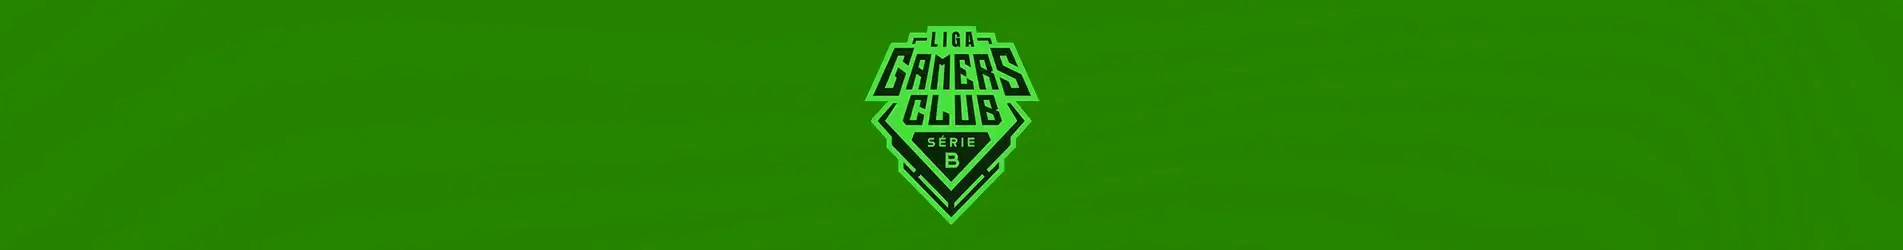 9z Academy vs Arena Jogue Fácil - Liga Gamers Club - Série A by Itaú:  Julho/23